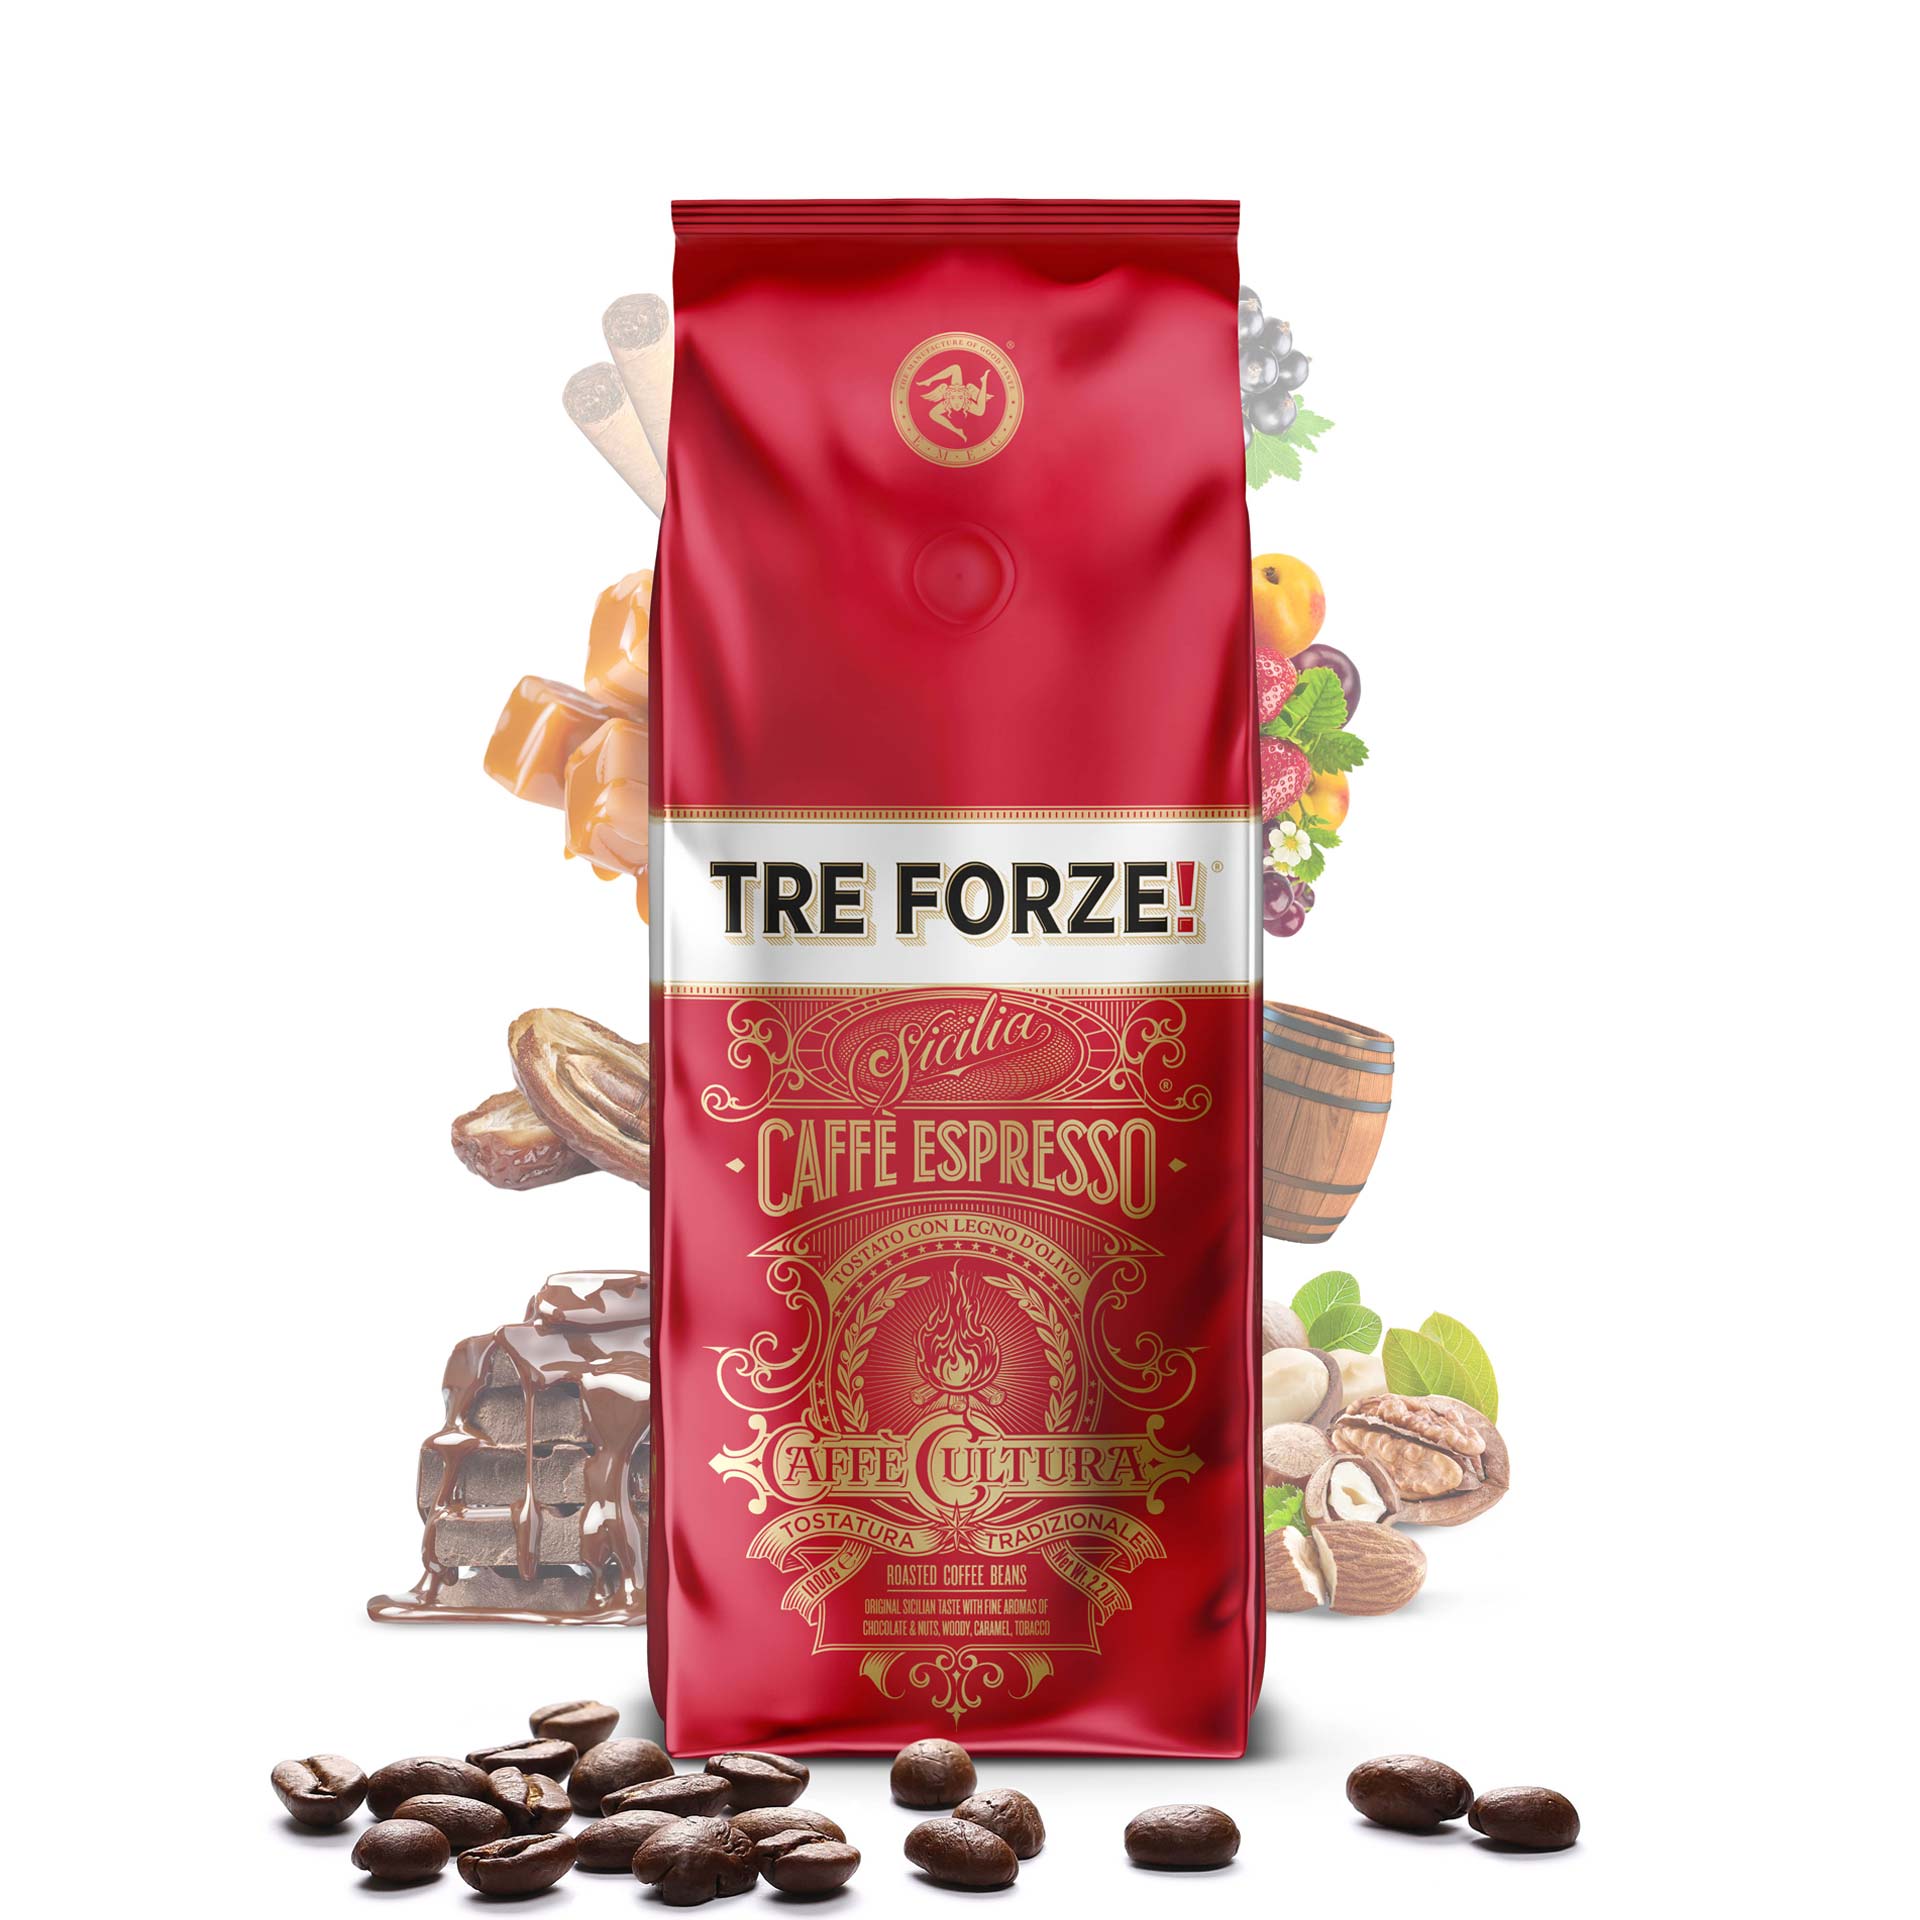 TRE FORZE! - Caffè Espresso - 1000g Bohnen